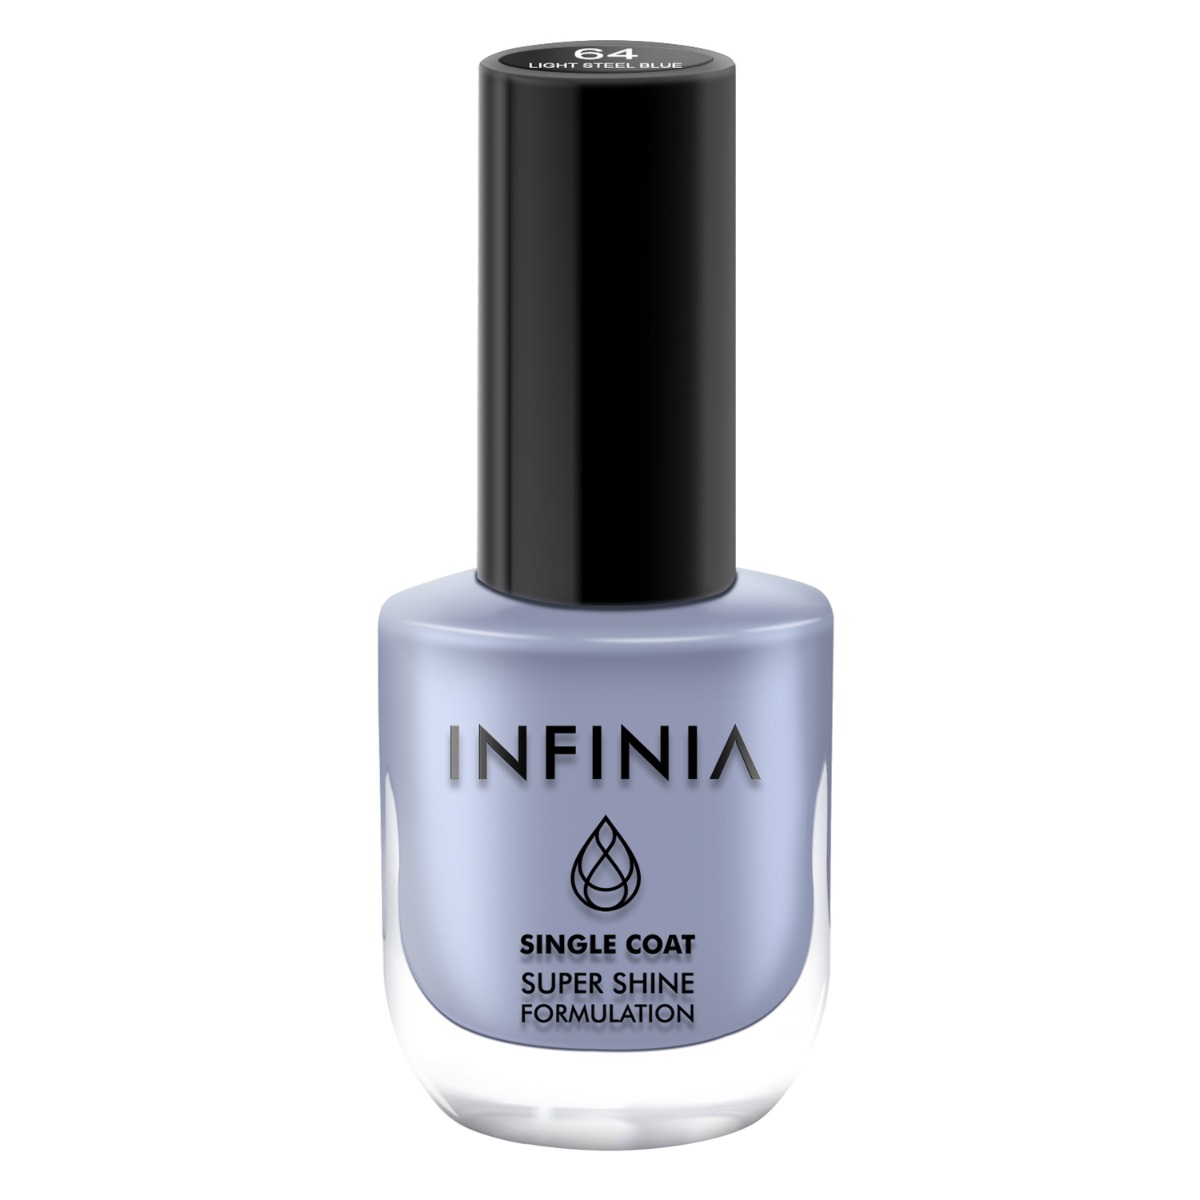 INFINIA Single Coat Super Shine Nail Polish With Ultra High Gloss, 12ml-064 Light Steel Blue